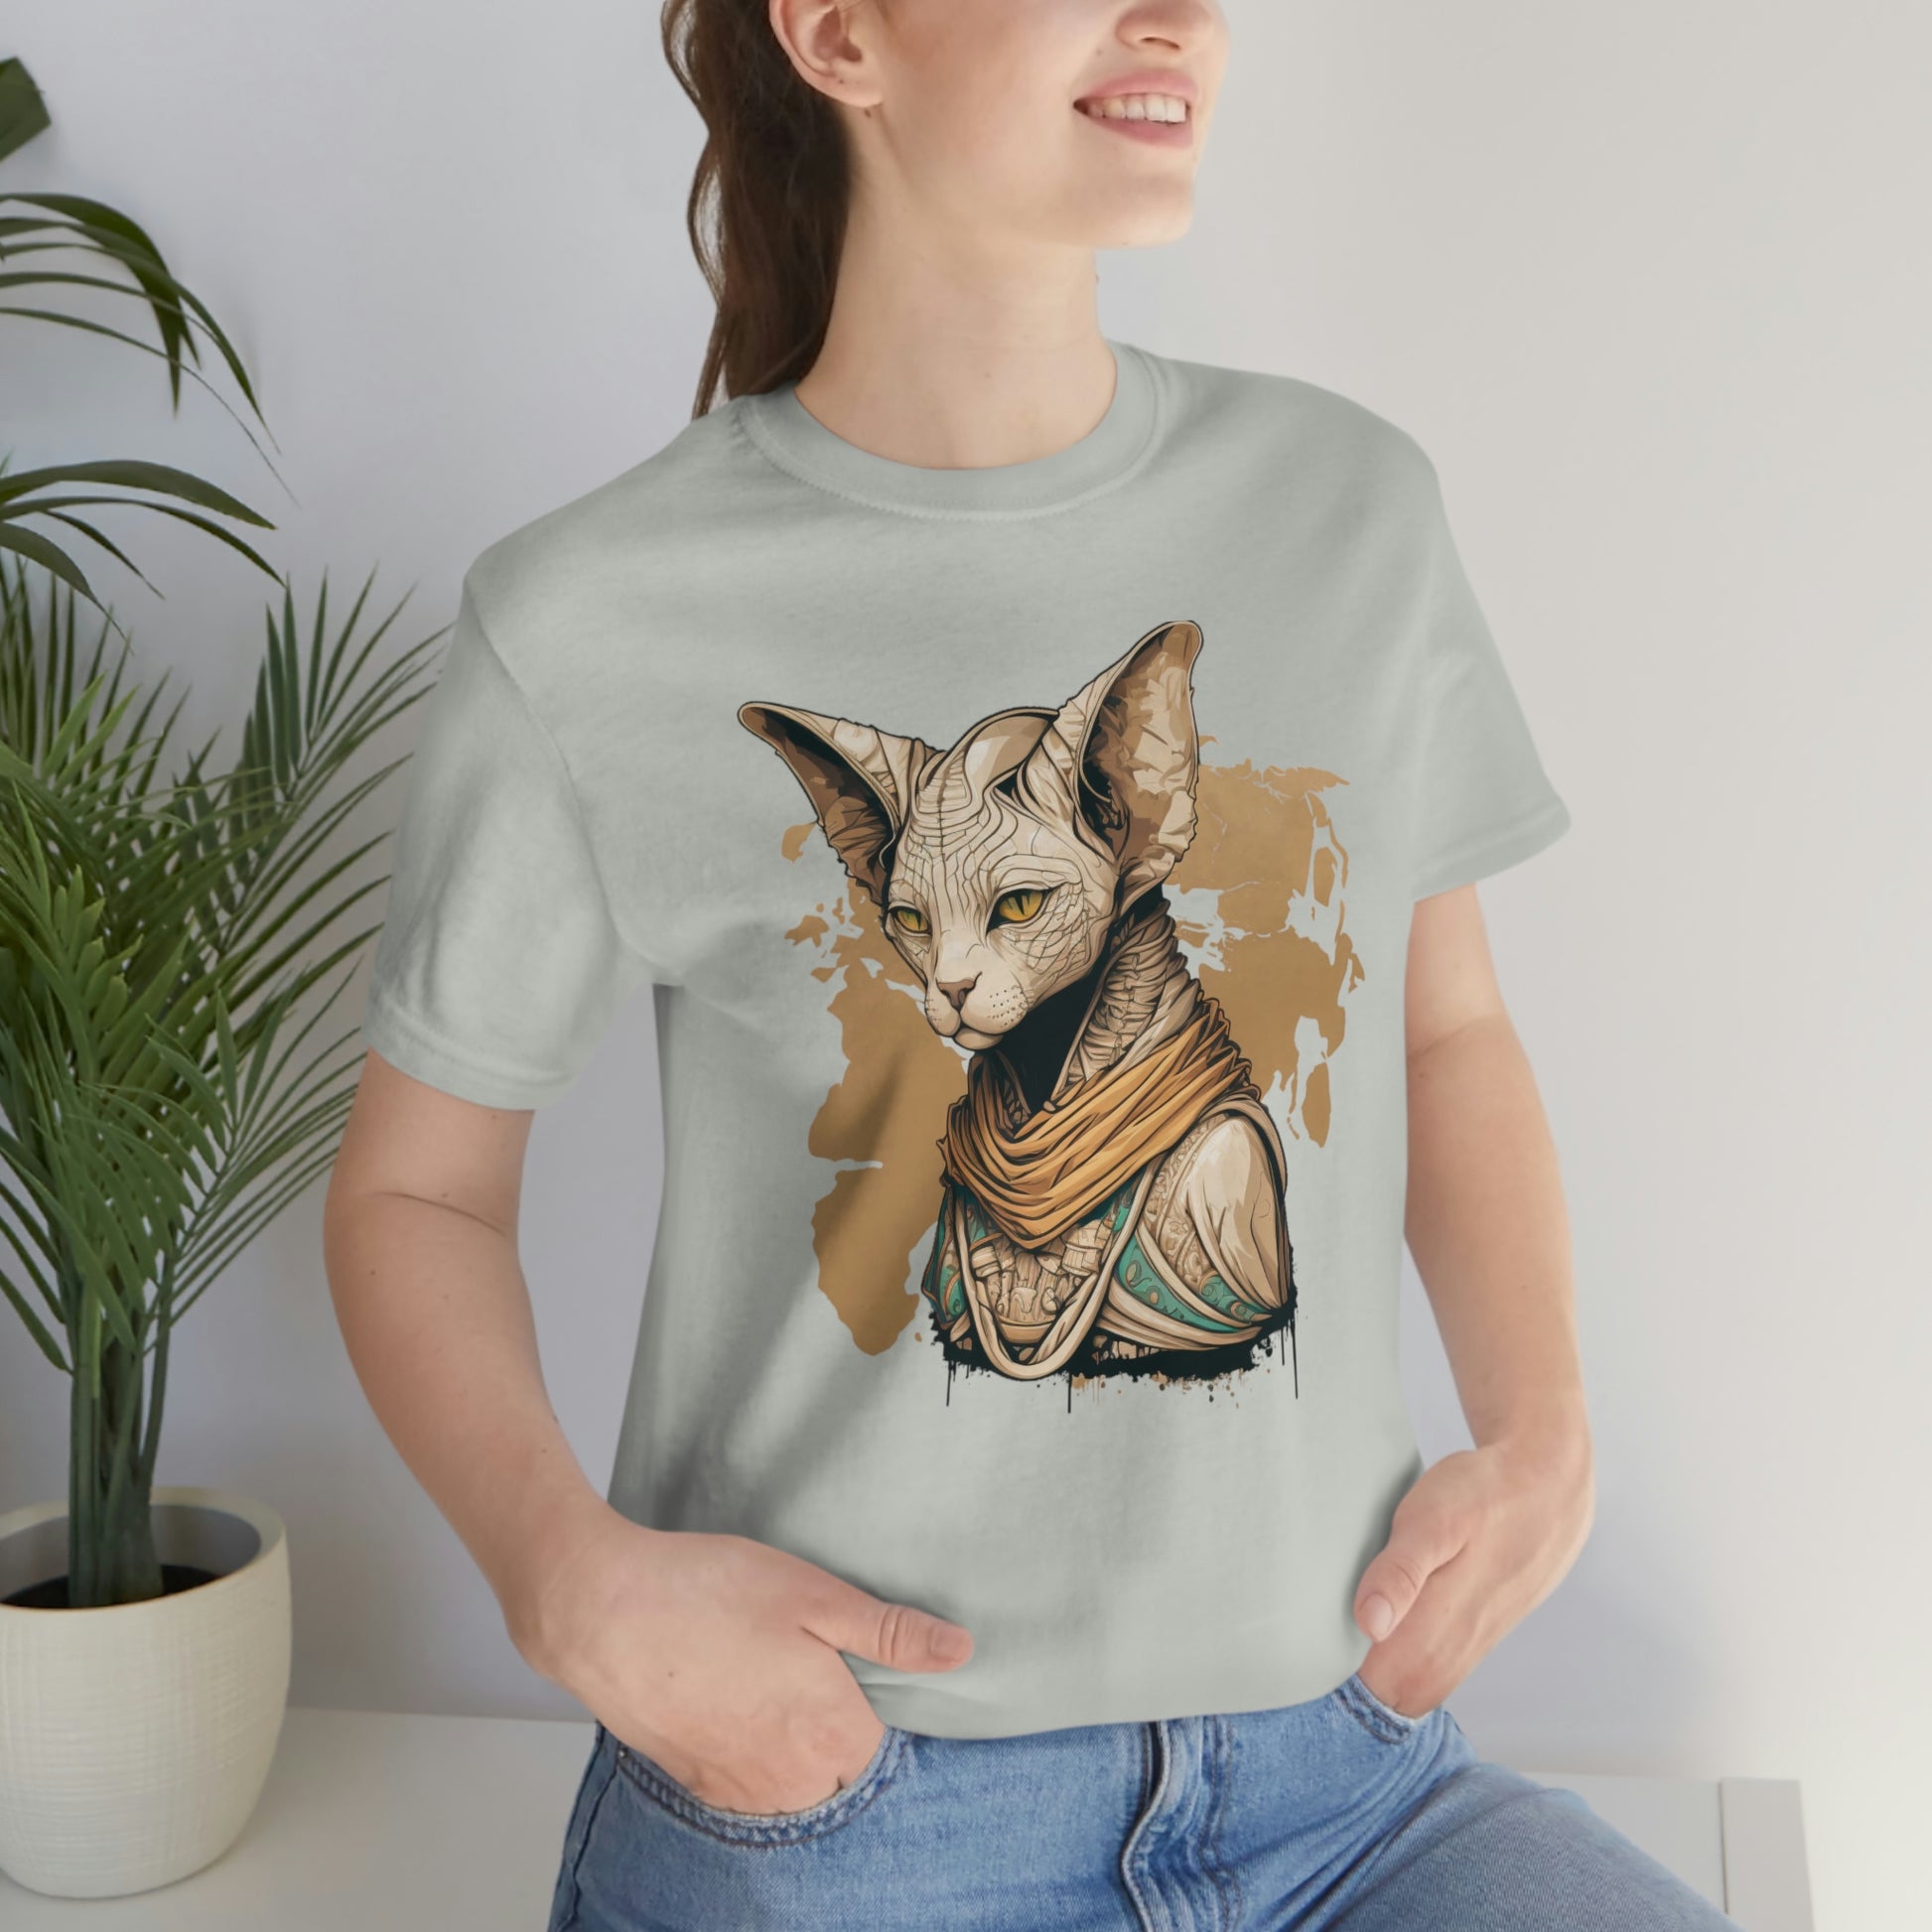 Sphynx cat Tee, cat ancient egypt T-shirt, Sphynx cat pyramid egypt tshirt, pharaoh cat t shirt, Sphynx cat Mom shirt, Sphynx cat owner gift